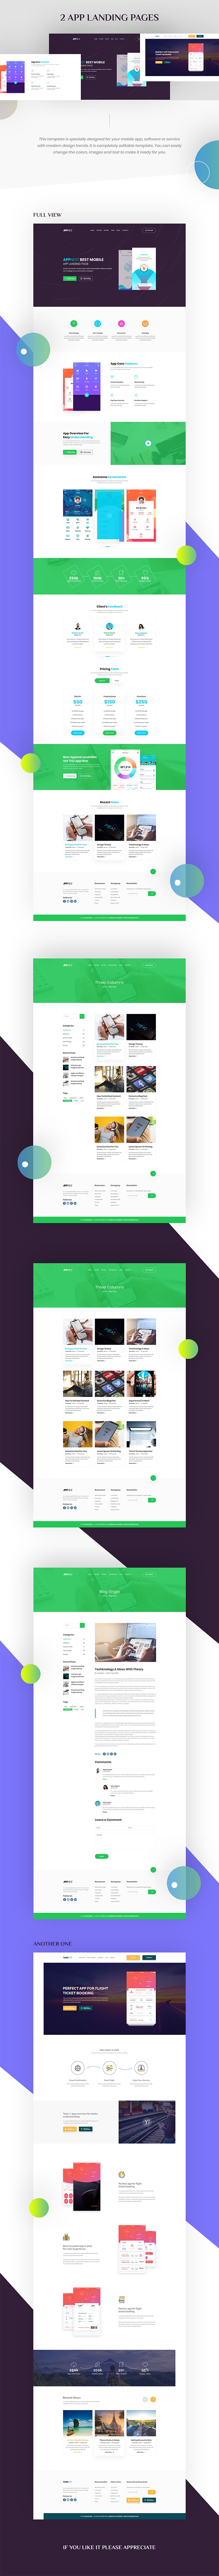 Freebie : Creative Soft App Landing Page Template Design For Mobile App